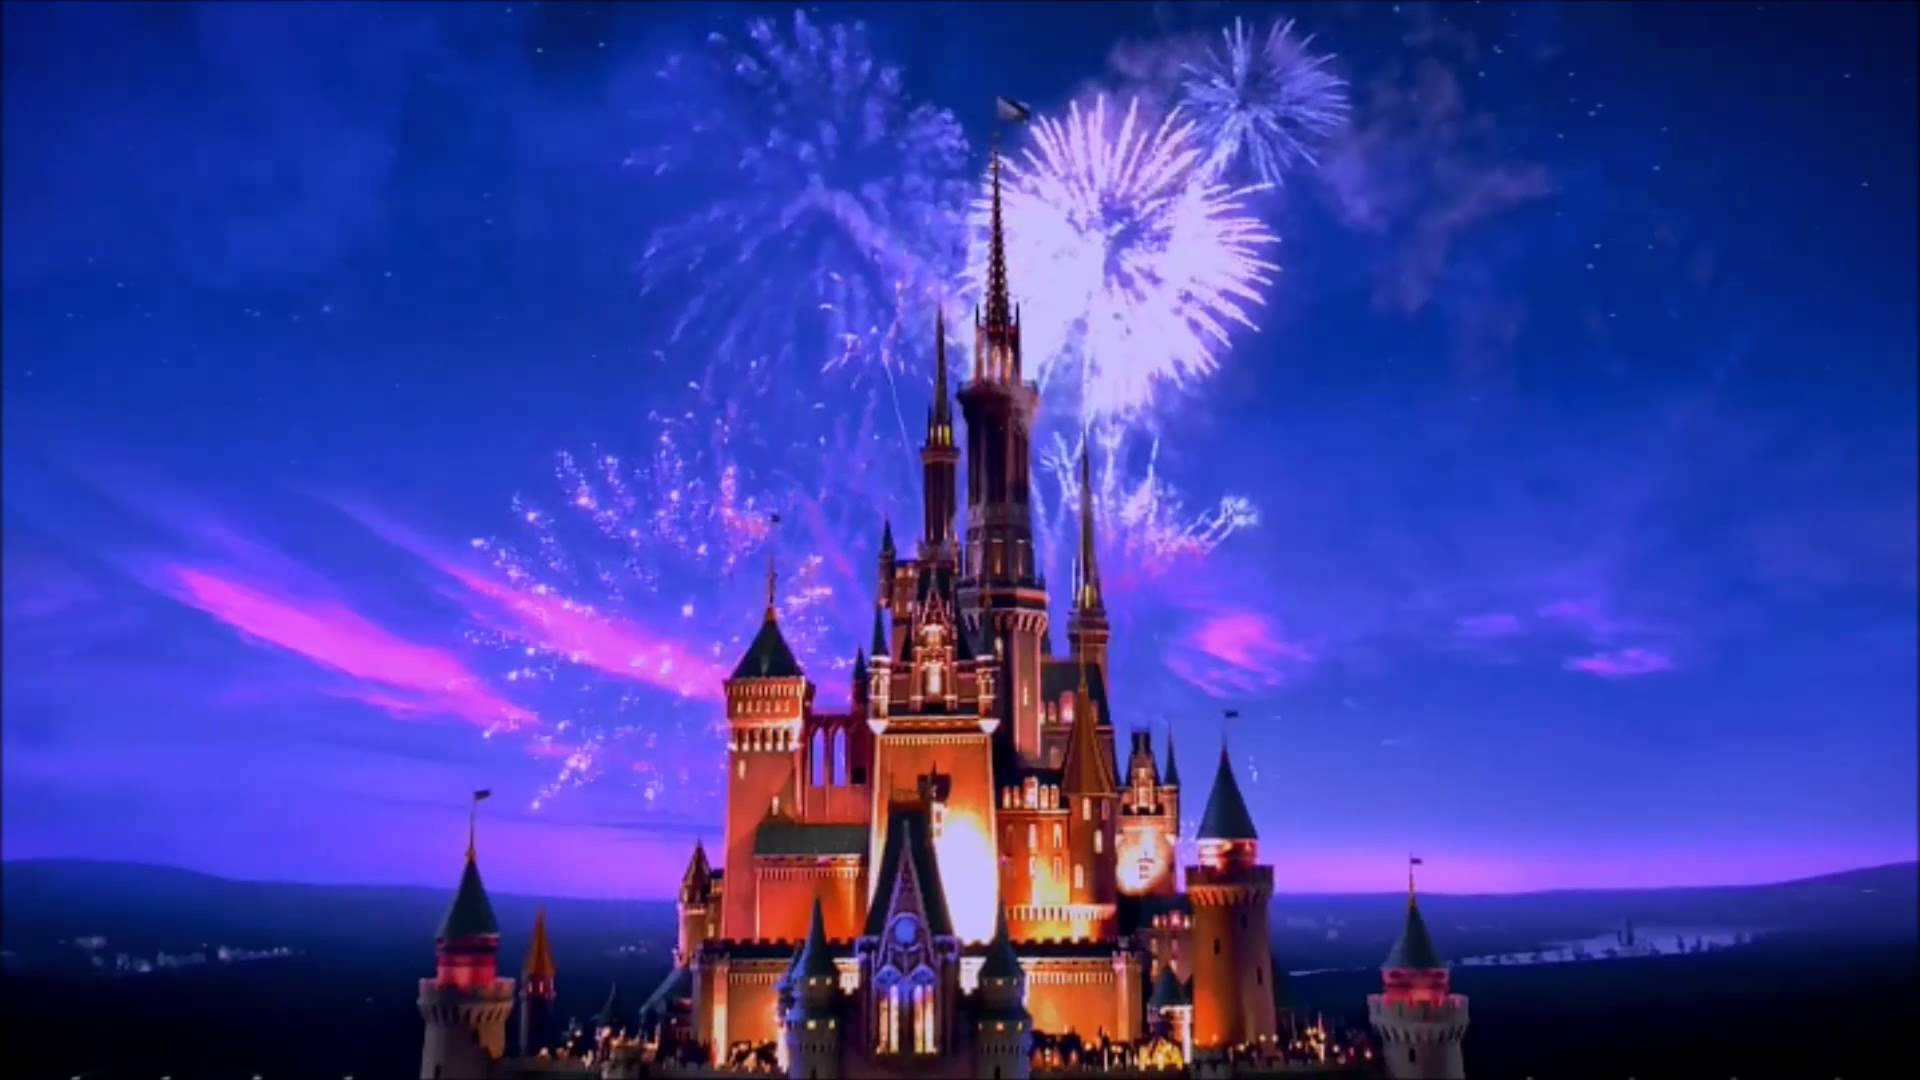 Disney Castle With Fireworks Wallpaper High Resolution, Cartoons